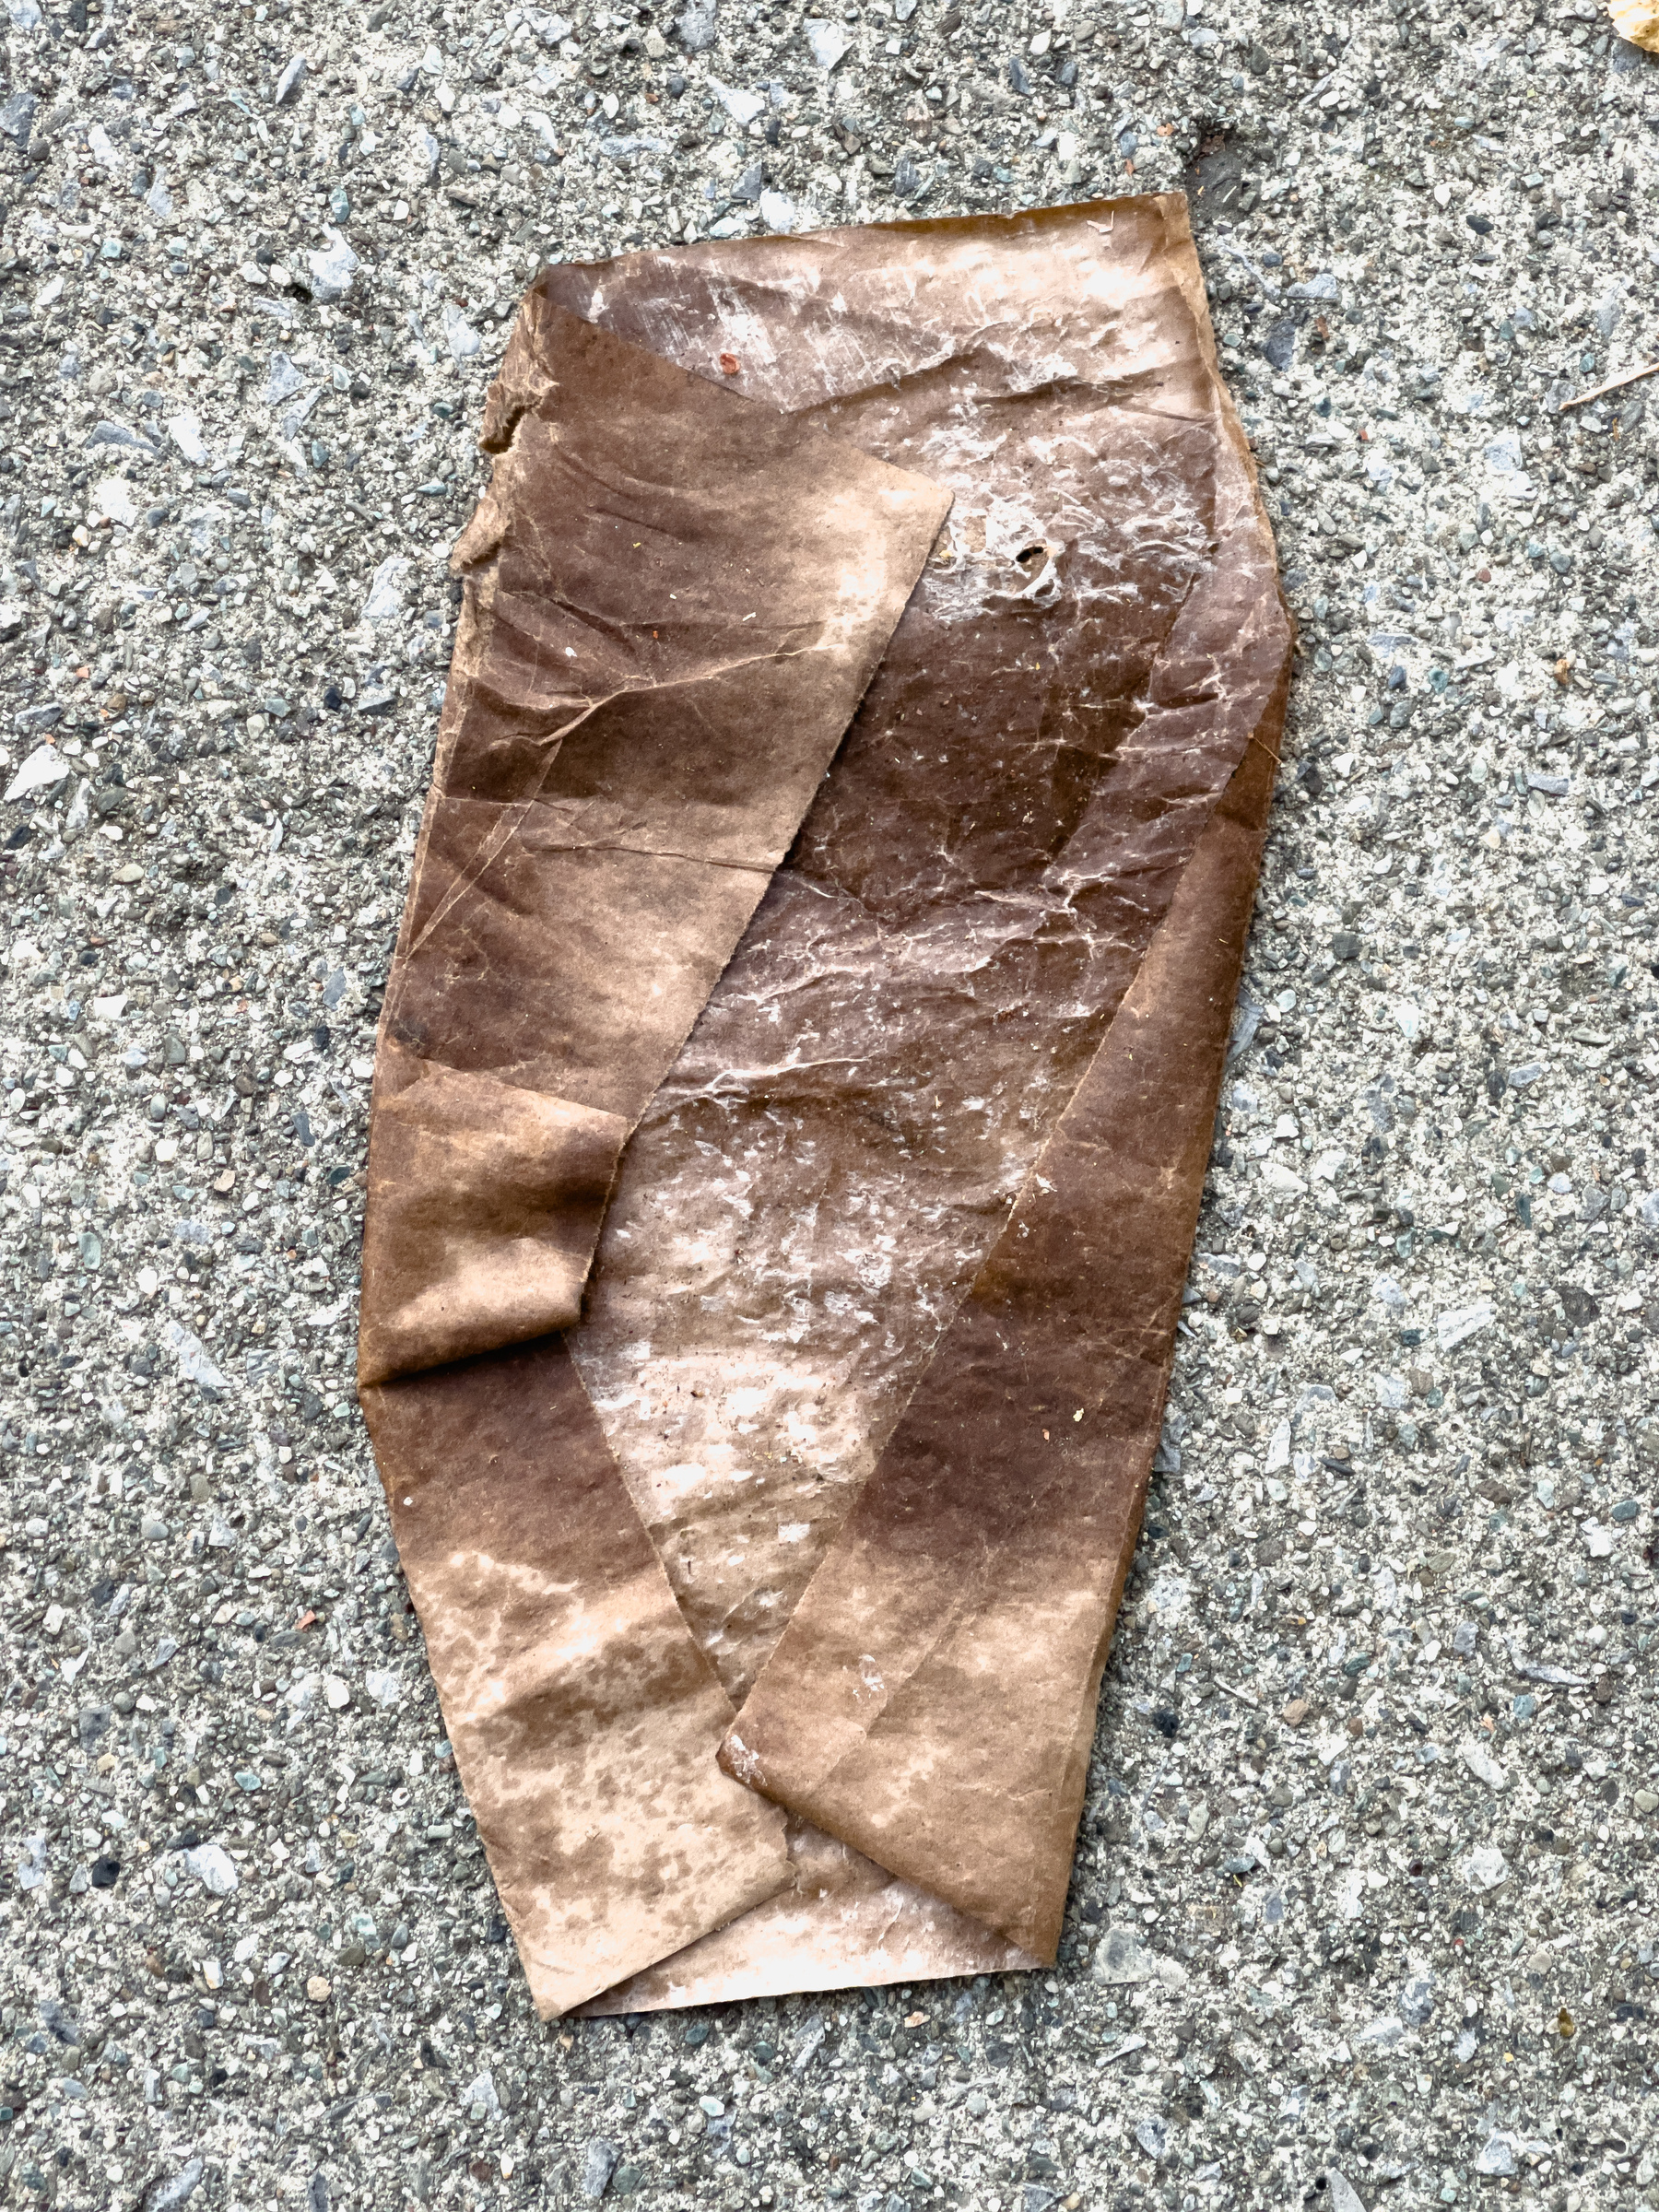 Brown wax paper folded in an interesting way on concrete sidewalk.